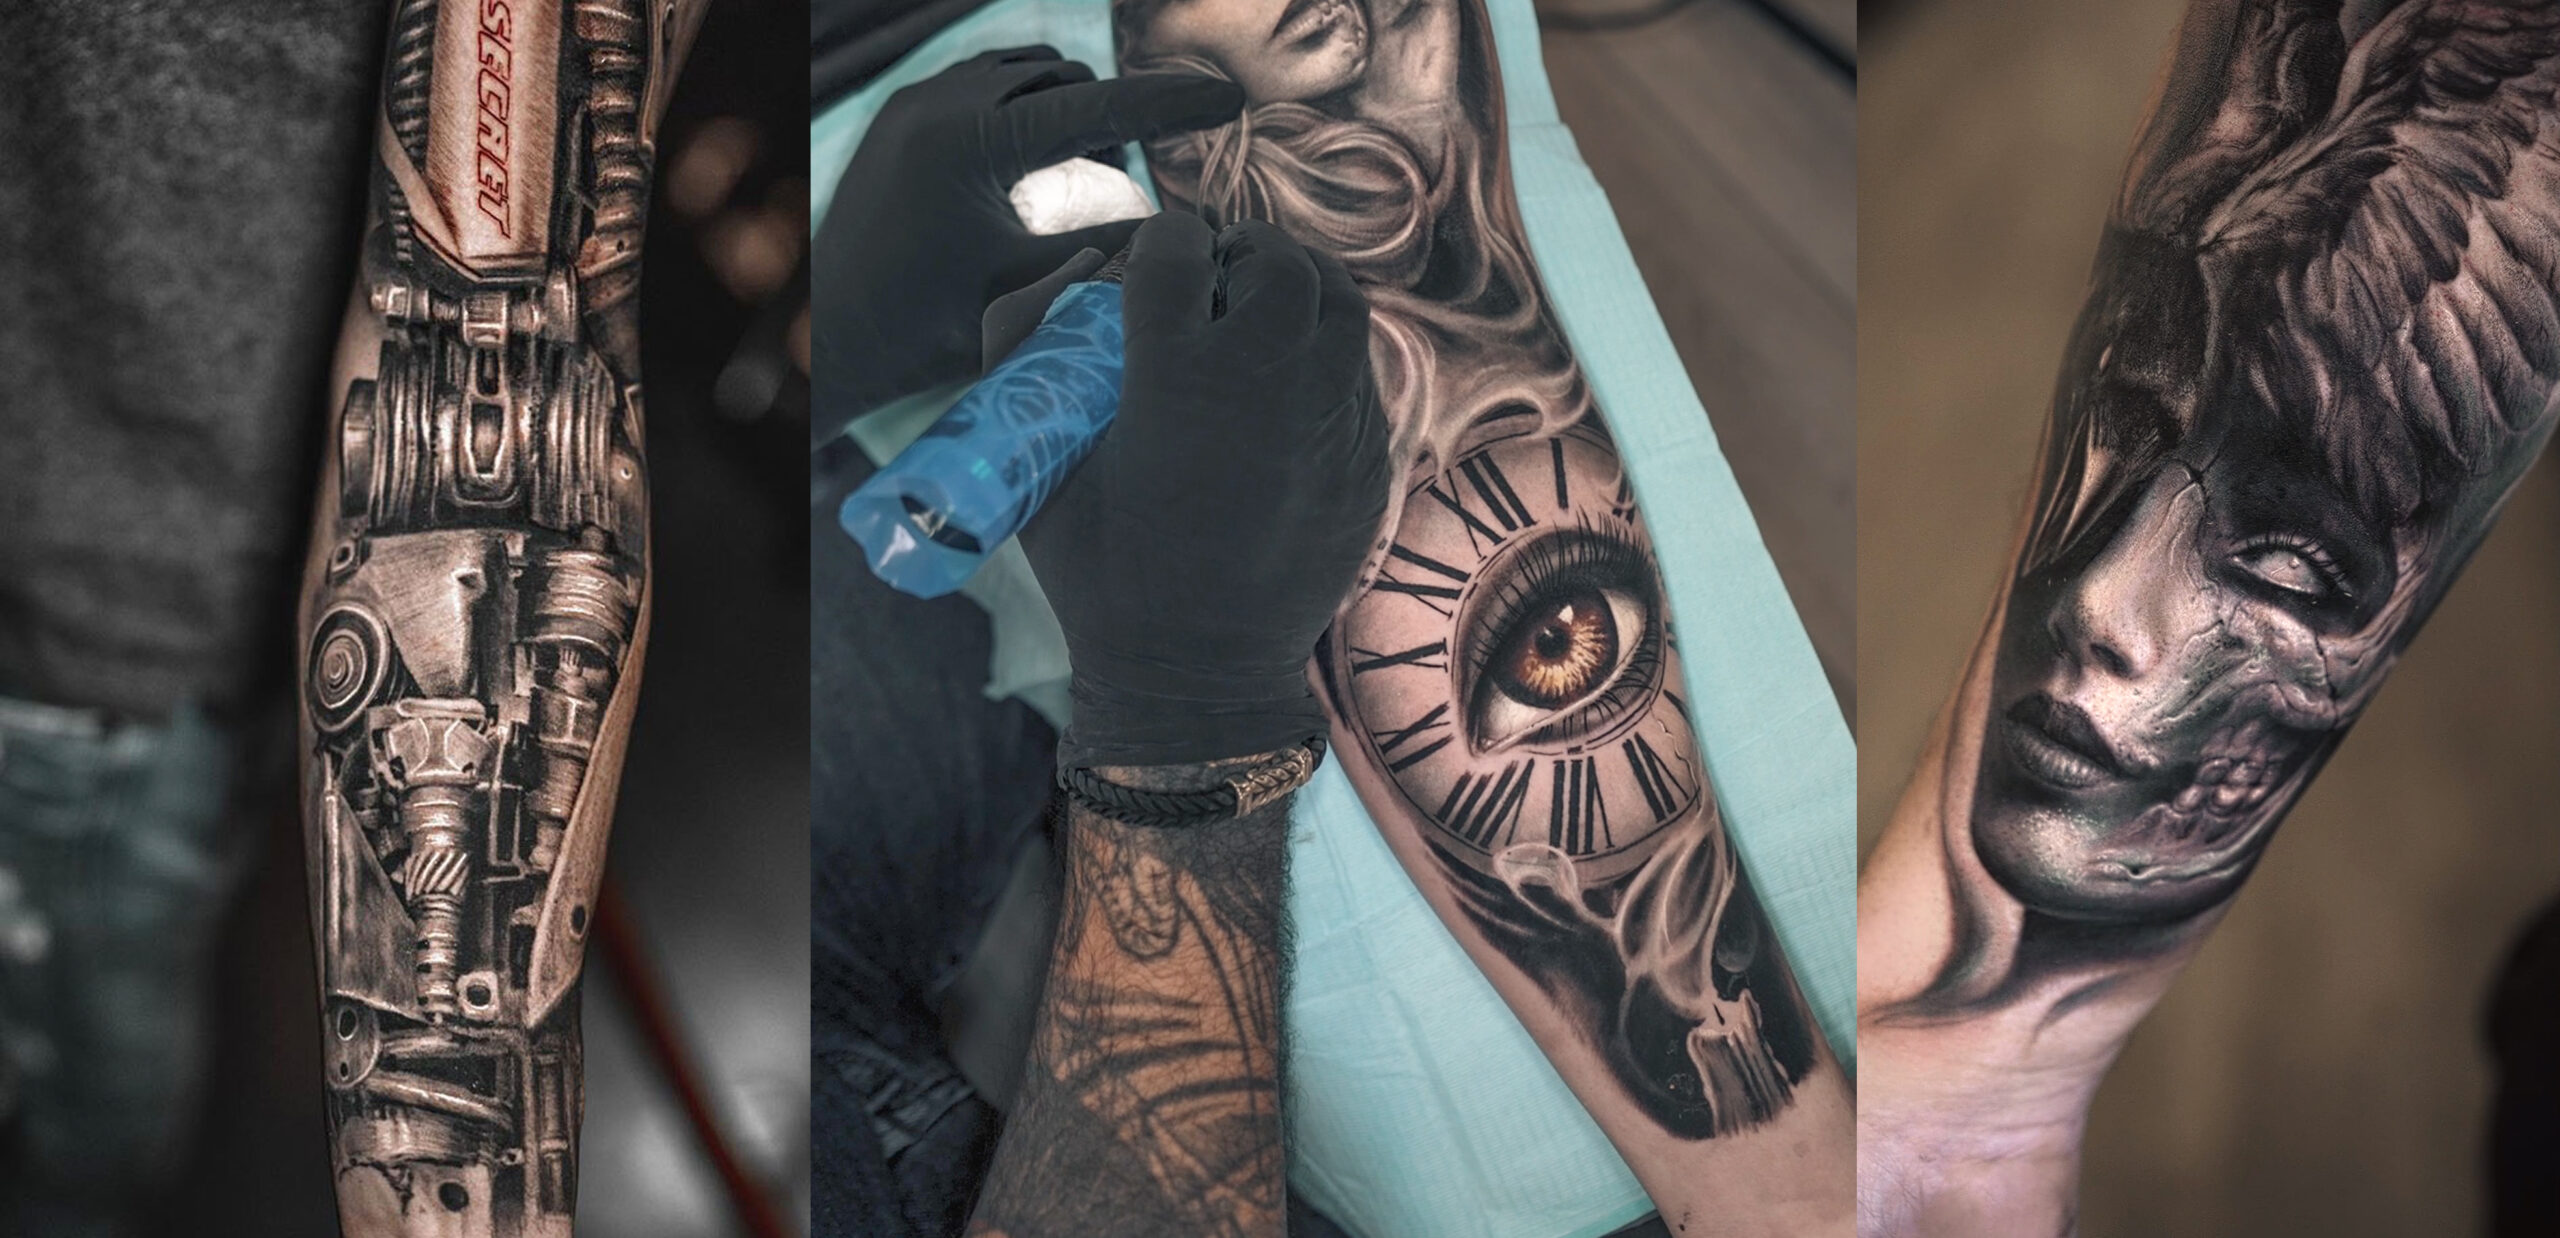 Cool Greek God Forearm Tattoo Design Ideas For Men - Best Forearm Tattoos  For Men: Cool Inner and Outer Forearm Tattoo Designs, Top Arm Tattoo Ideas  For Guys #tattoosforguys #tattoosformen #tattooideas #tattoodesigns #